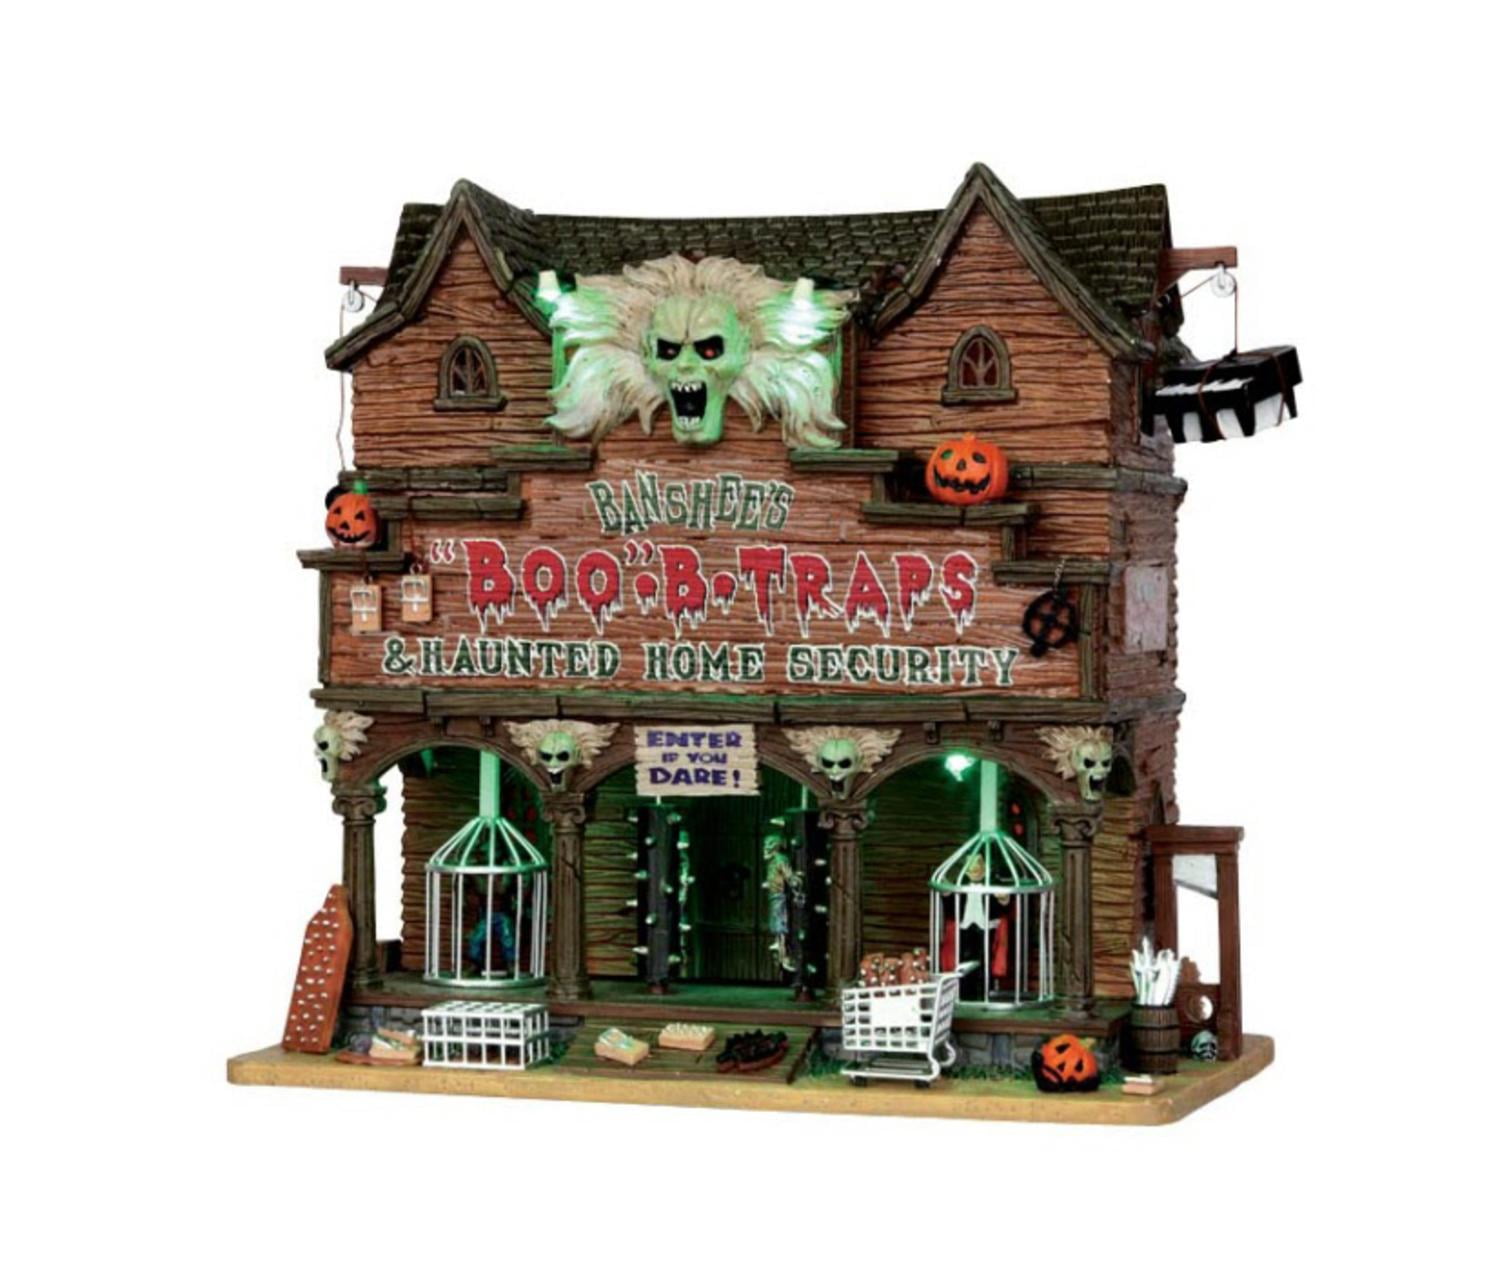  Lemax Spooky Town  Village  Banshee s Boo B Traps Halloween  